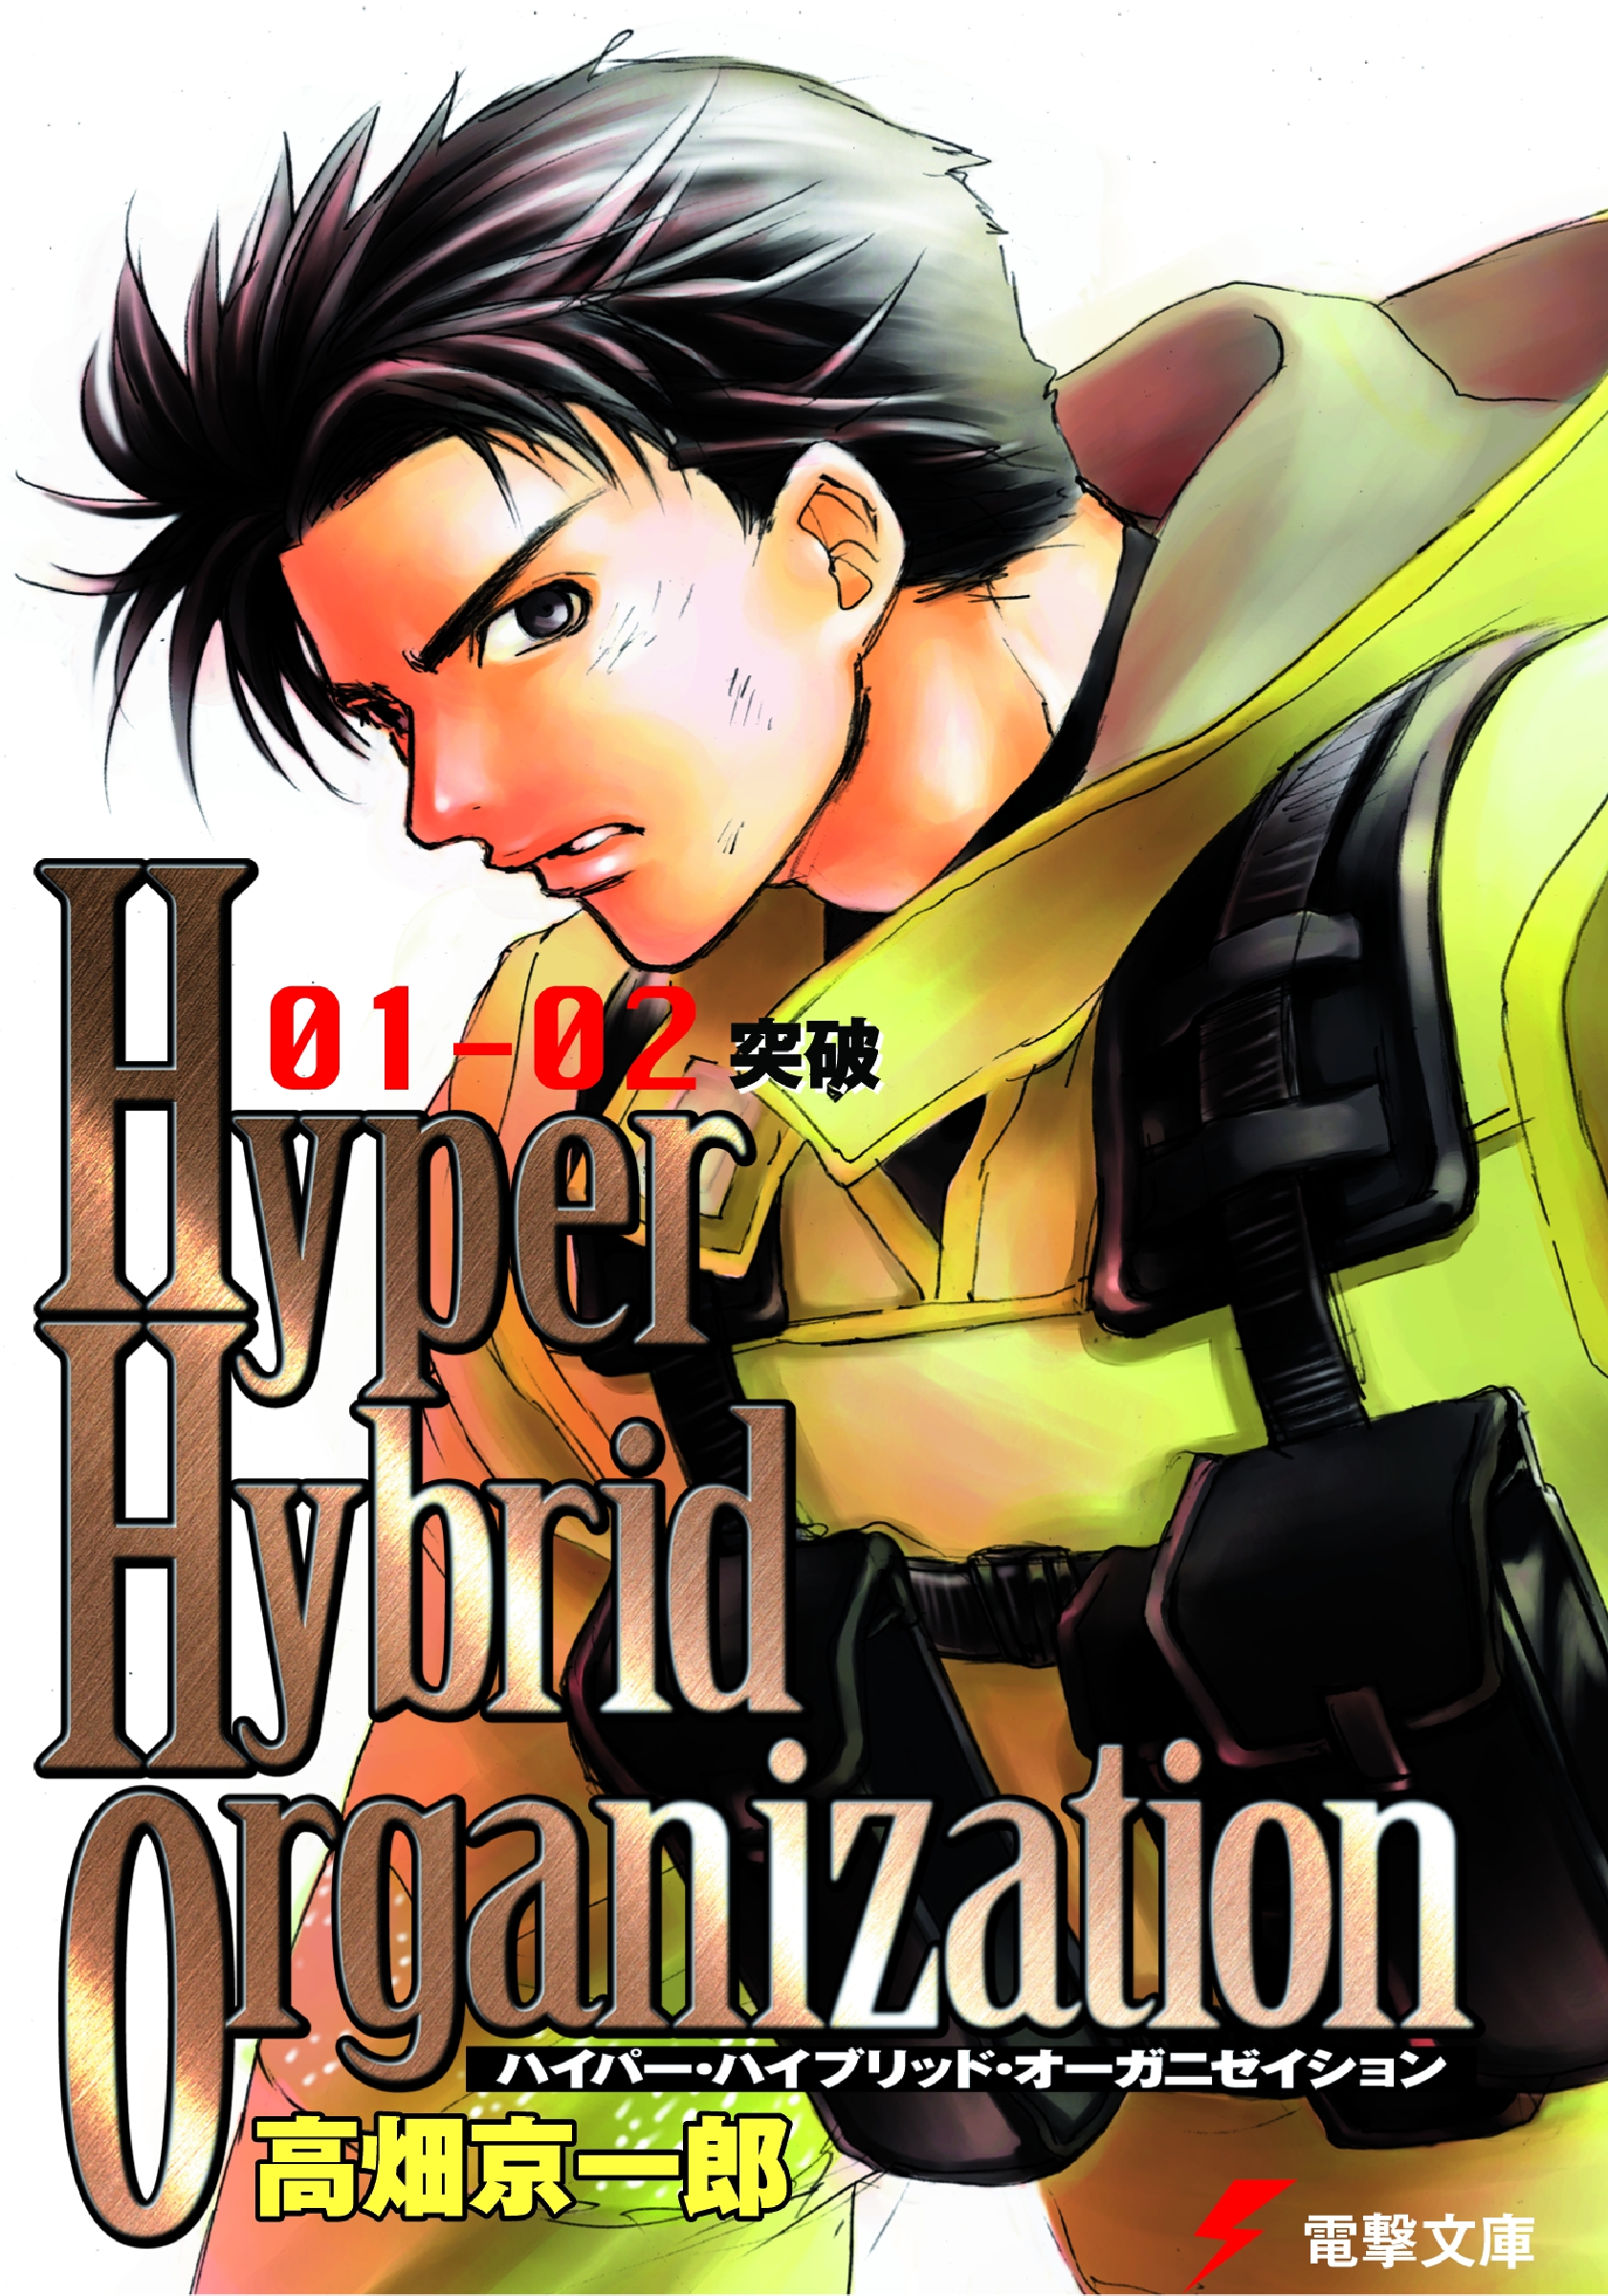 Hyper Hybrid Organization 01-02 突破 - 高畑京一郎/相川有 - 漫画